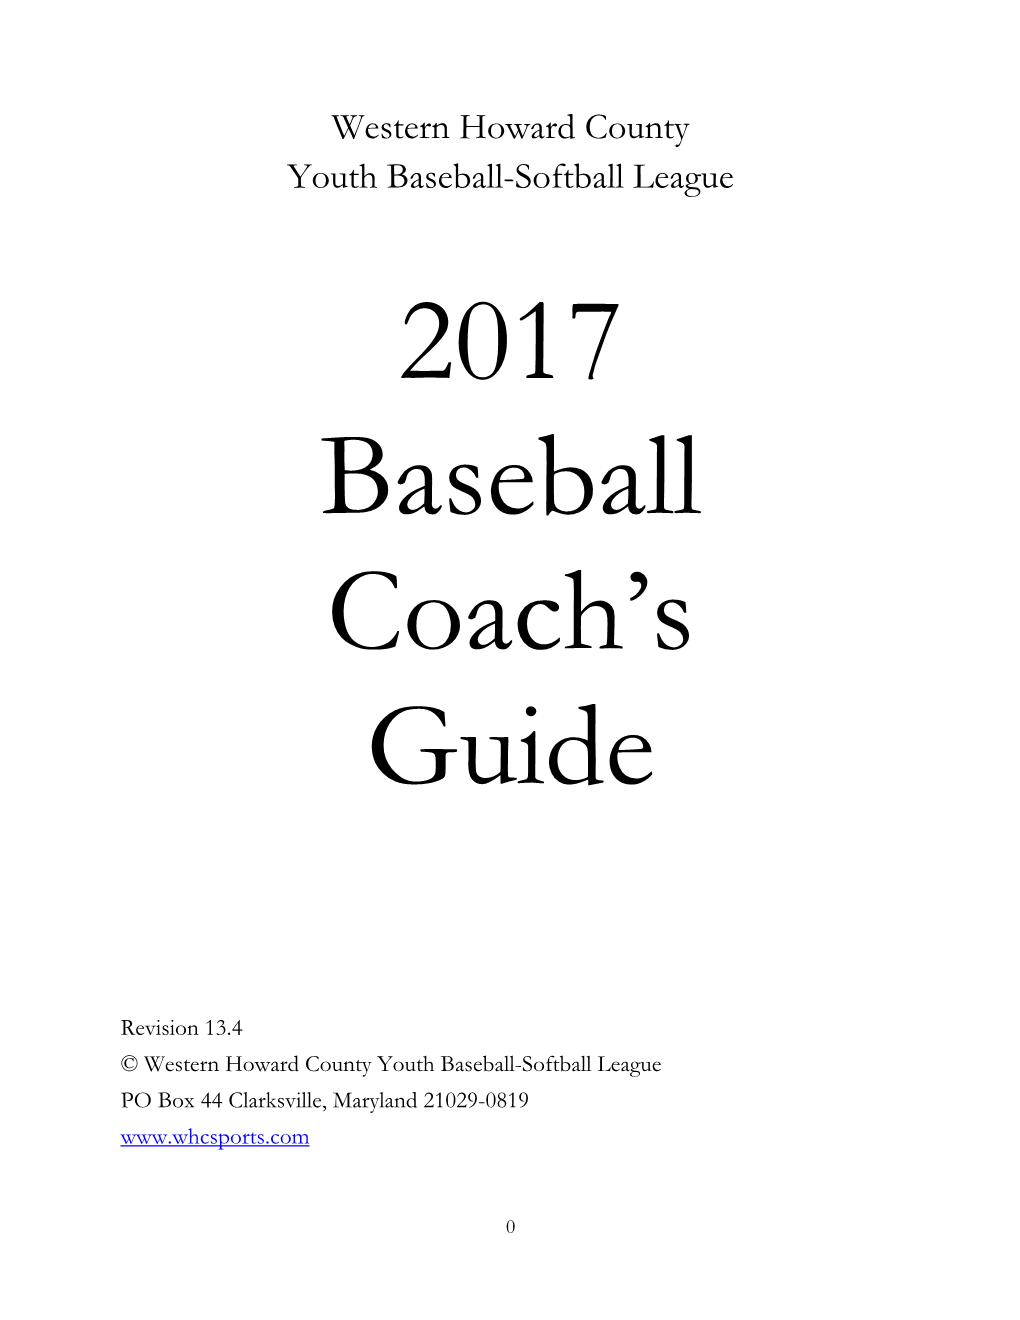 Western Howard County Youth Baseball-Softball League